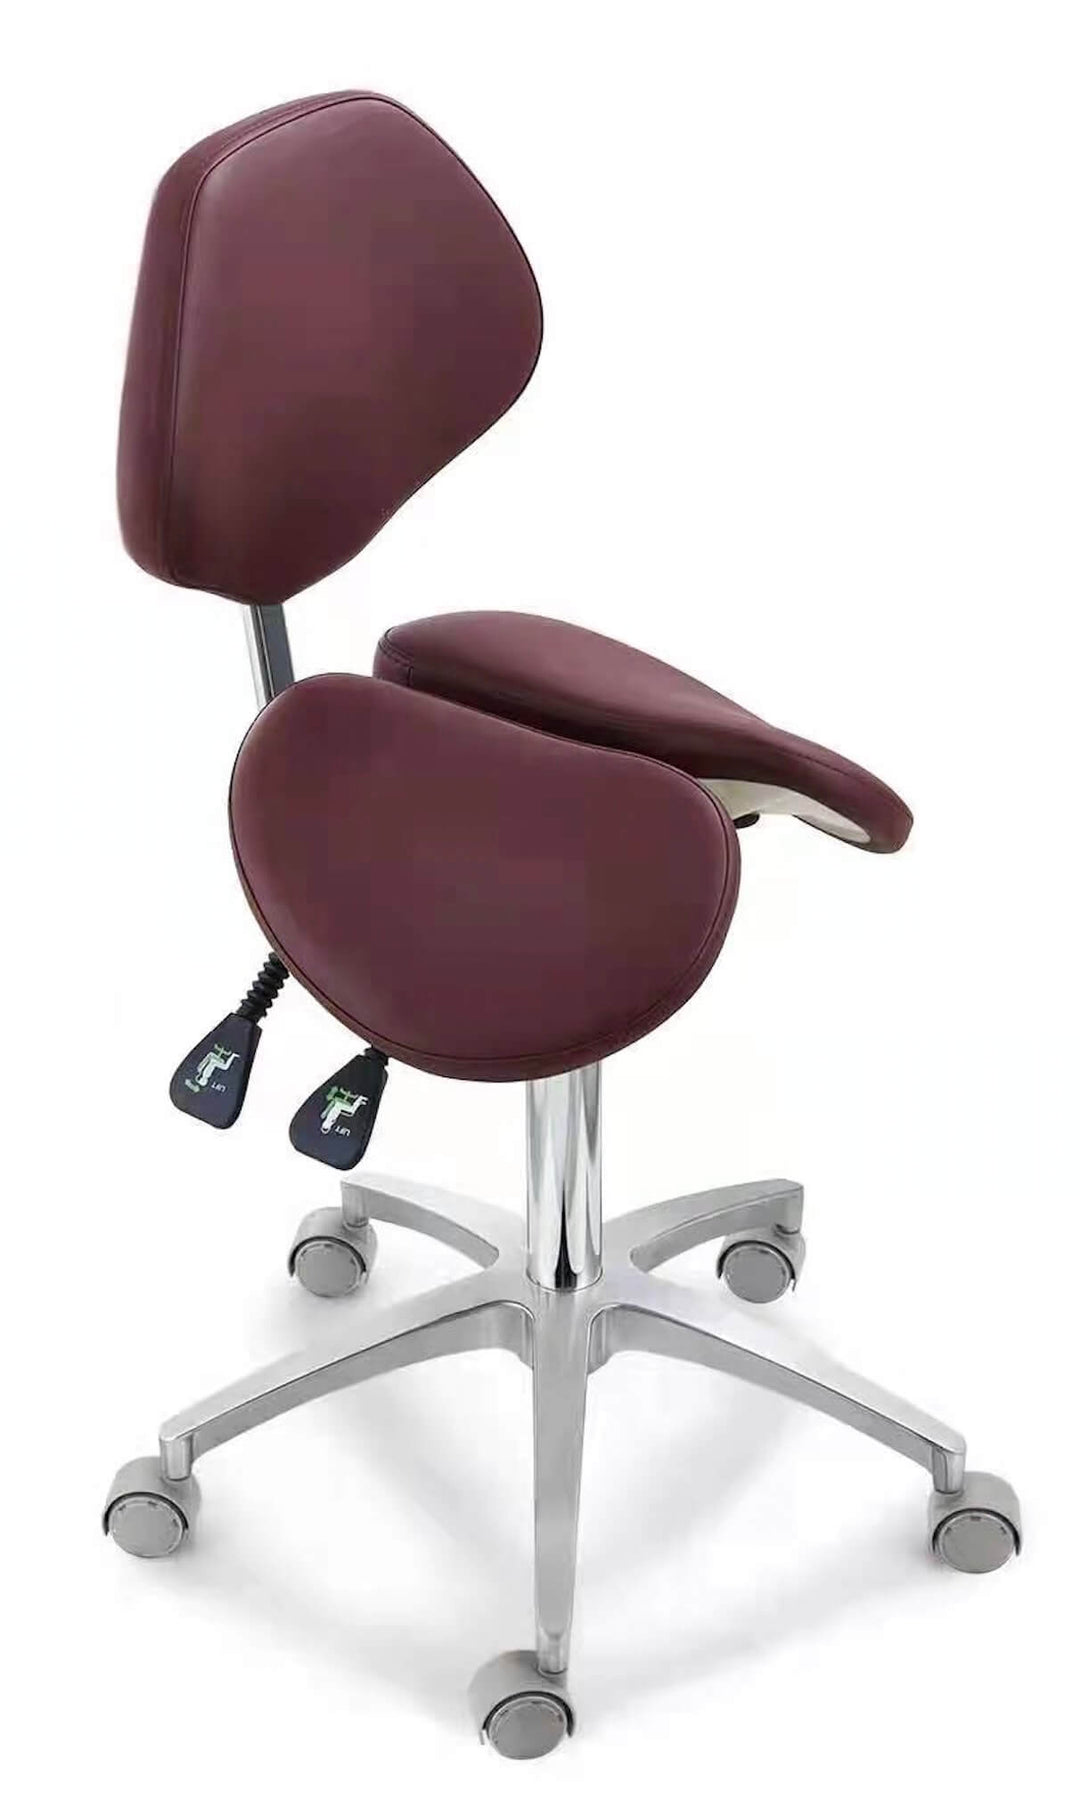 ADAE AD-2 dynamic split saddle stool ( New Release)